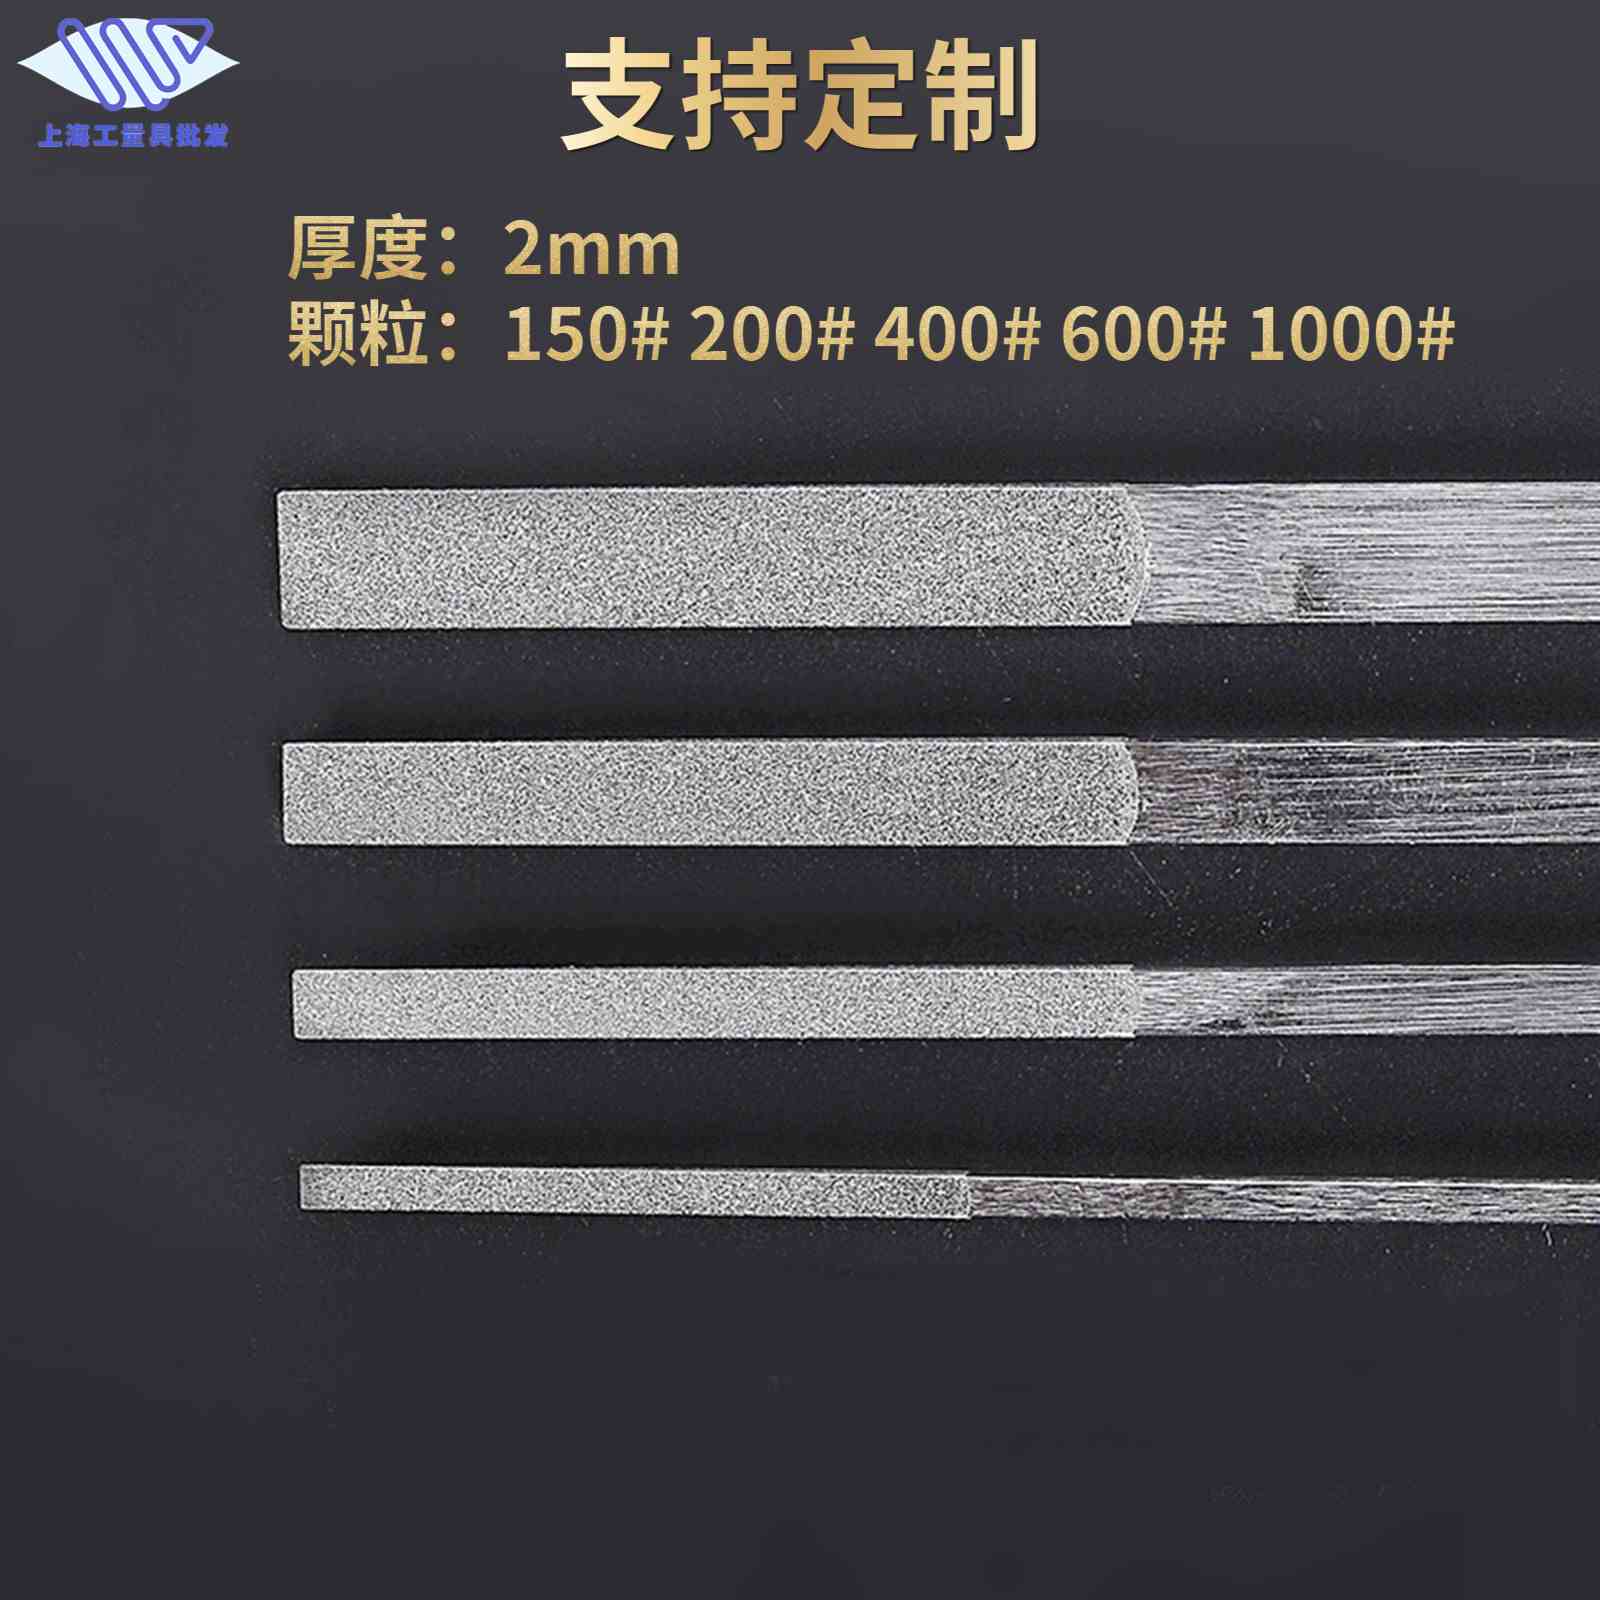 New filing knife 1000 mesh of fine fine steel flat beveler gold steel filing knife polishing tool 2mm4mm6mm8-Taobao